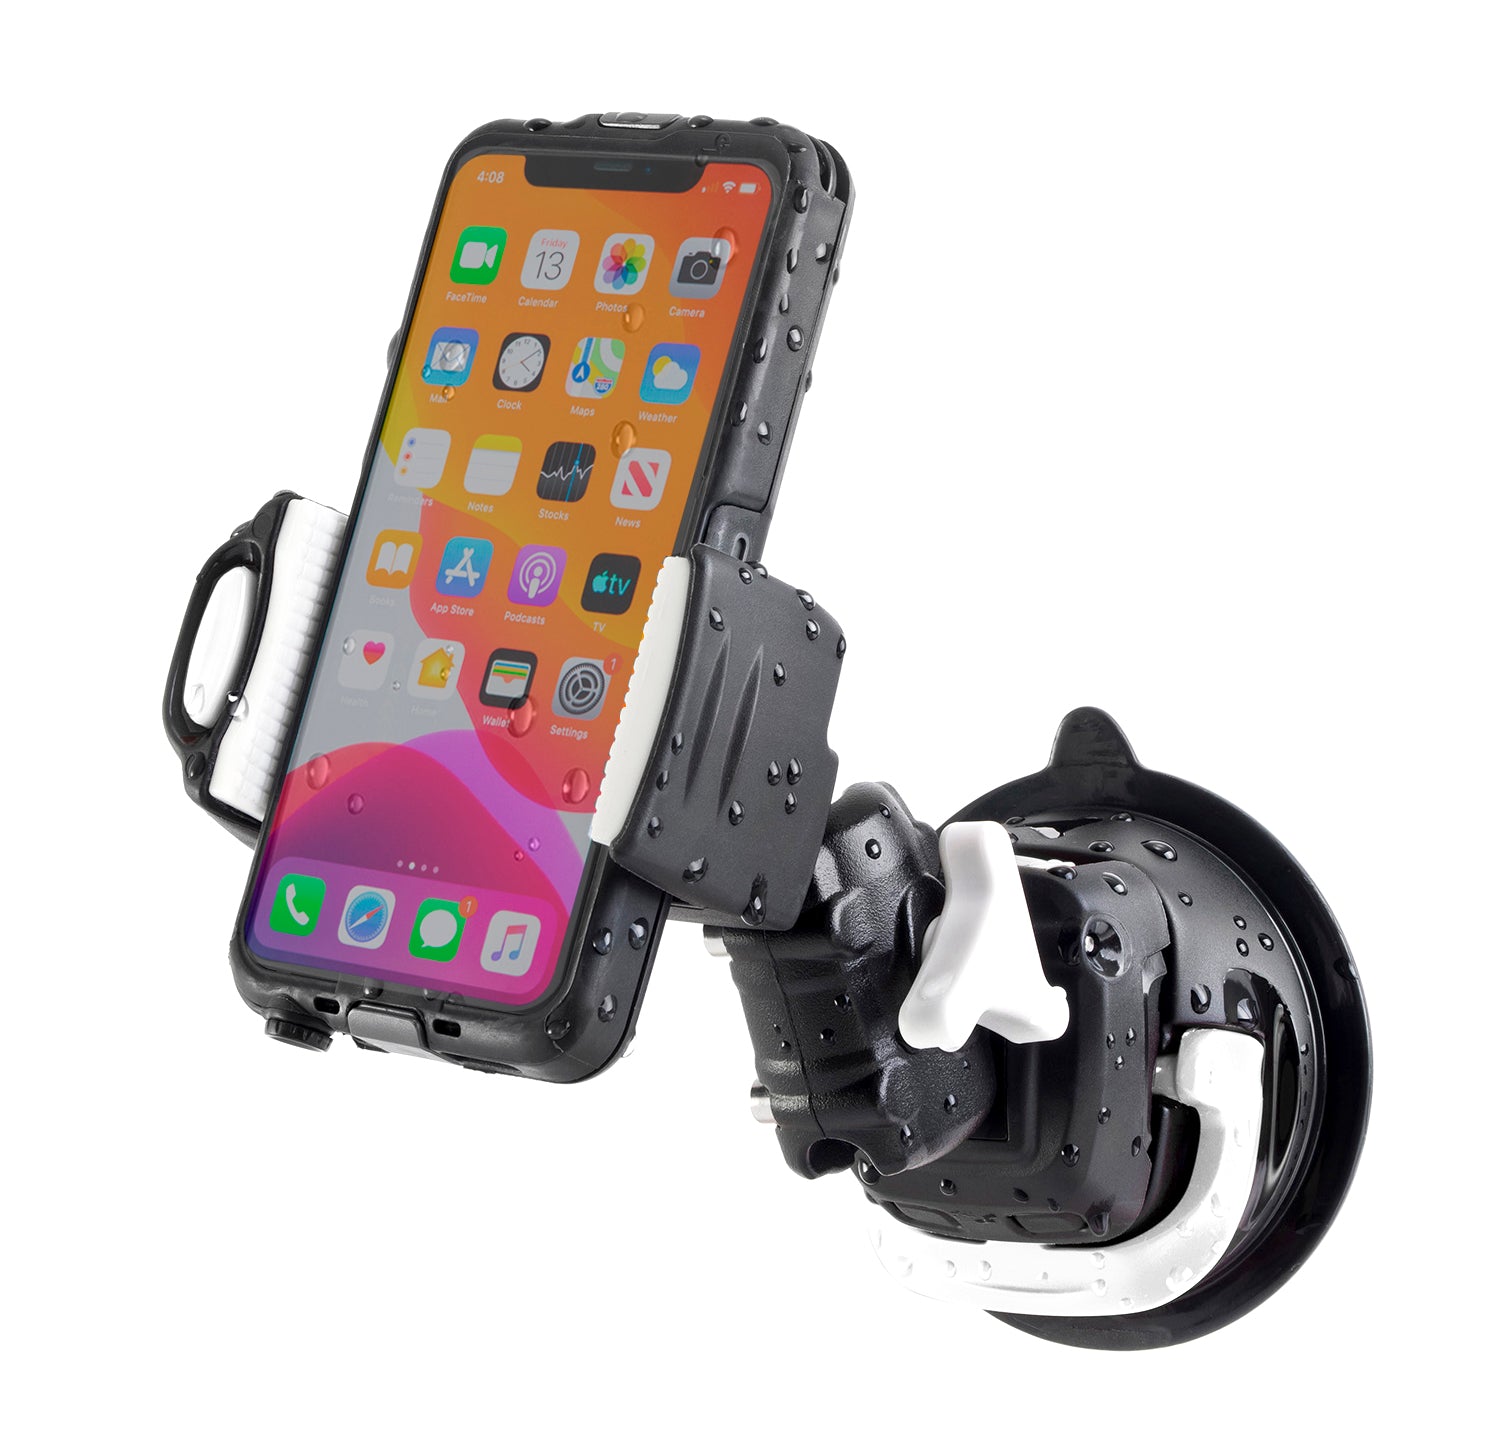 Scanstrut Rokk Phone Holder with Suction Cup Base - spo-cs-disabled - spo-default - spo-disabled - spo-notify-me-disabl